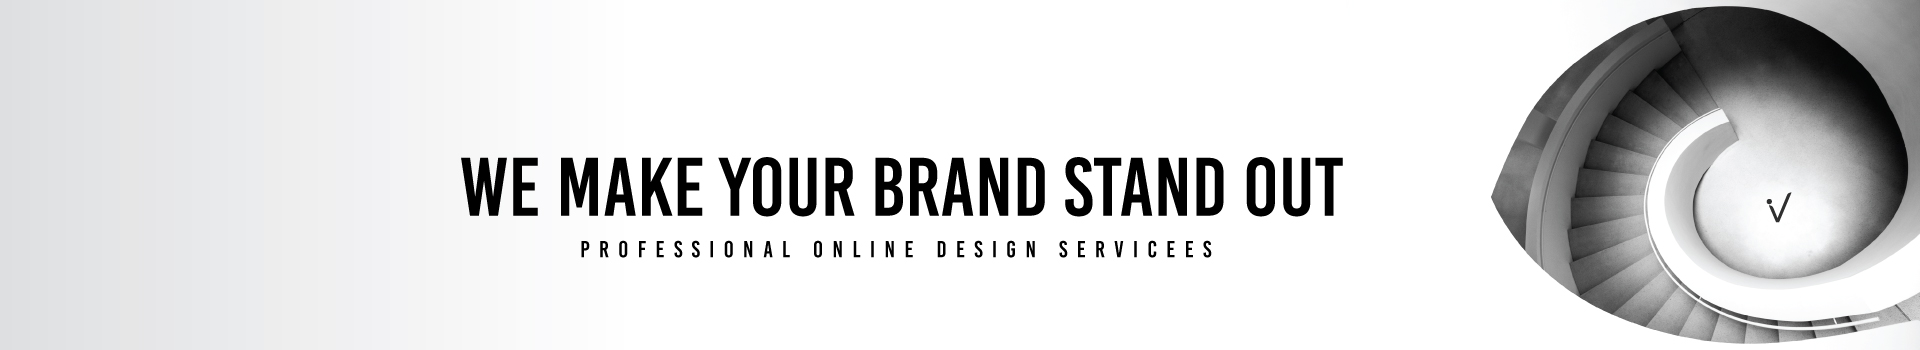 Online Design Service